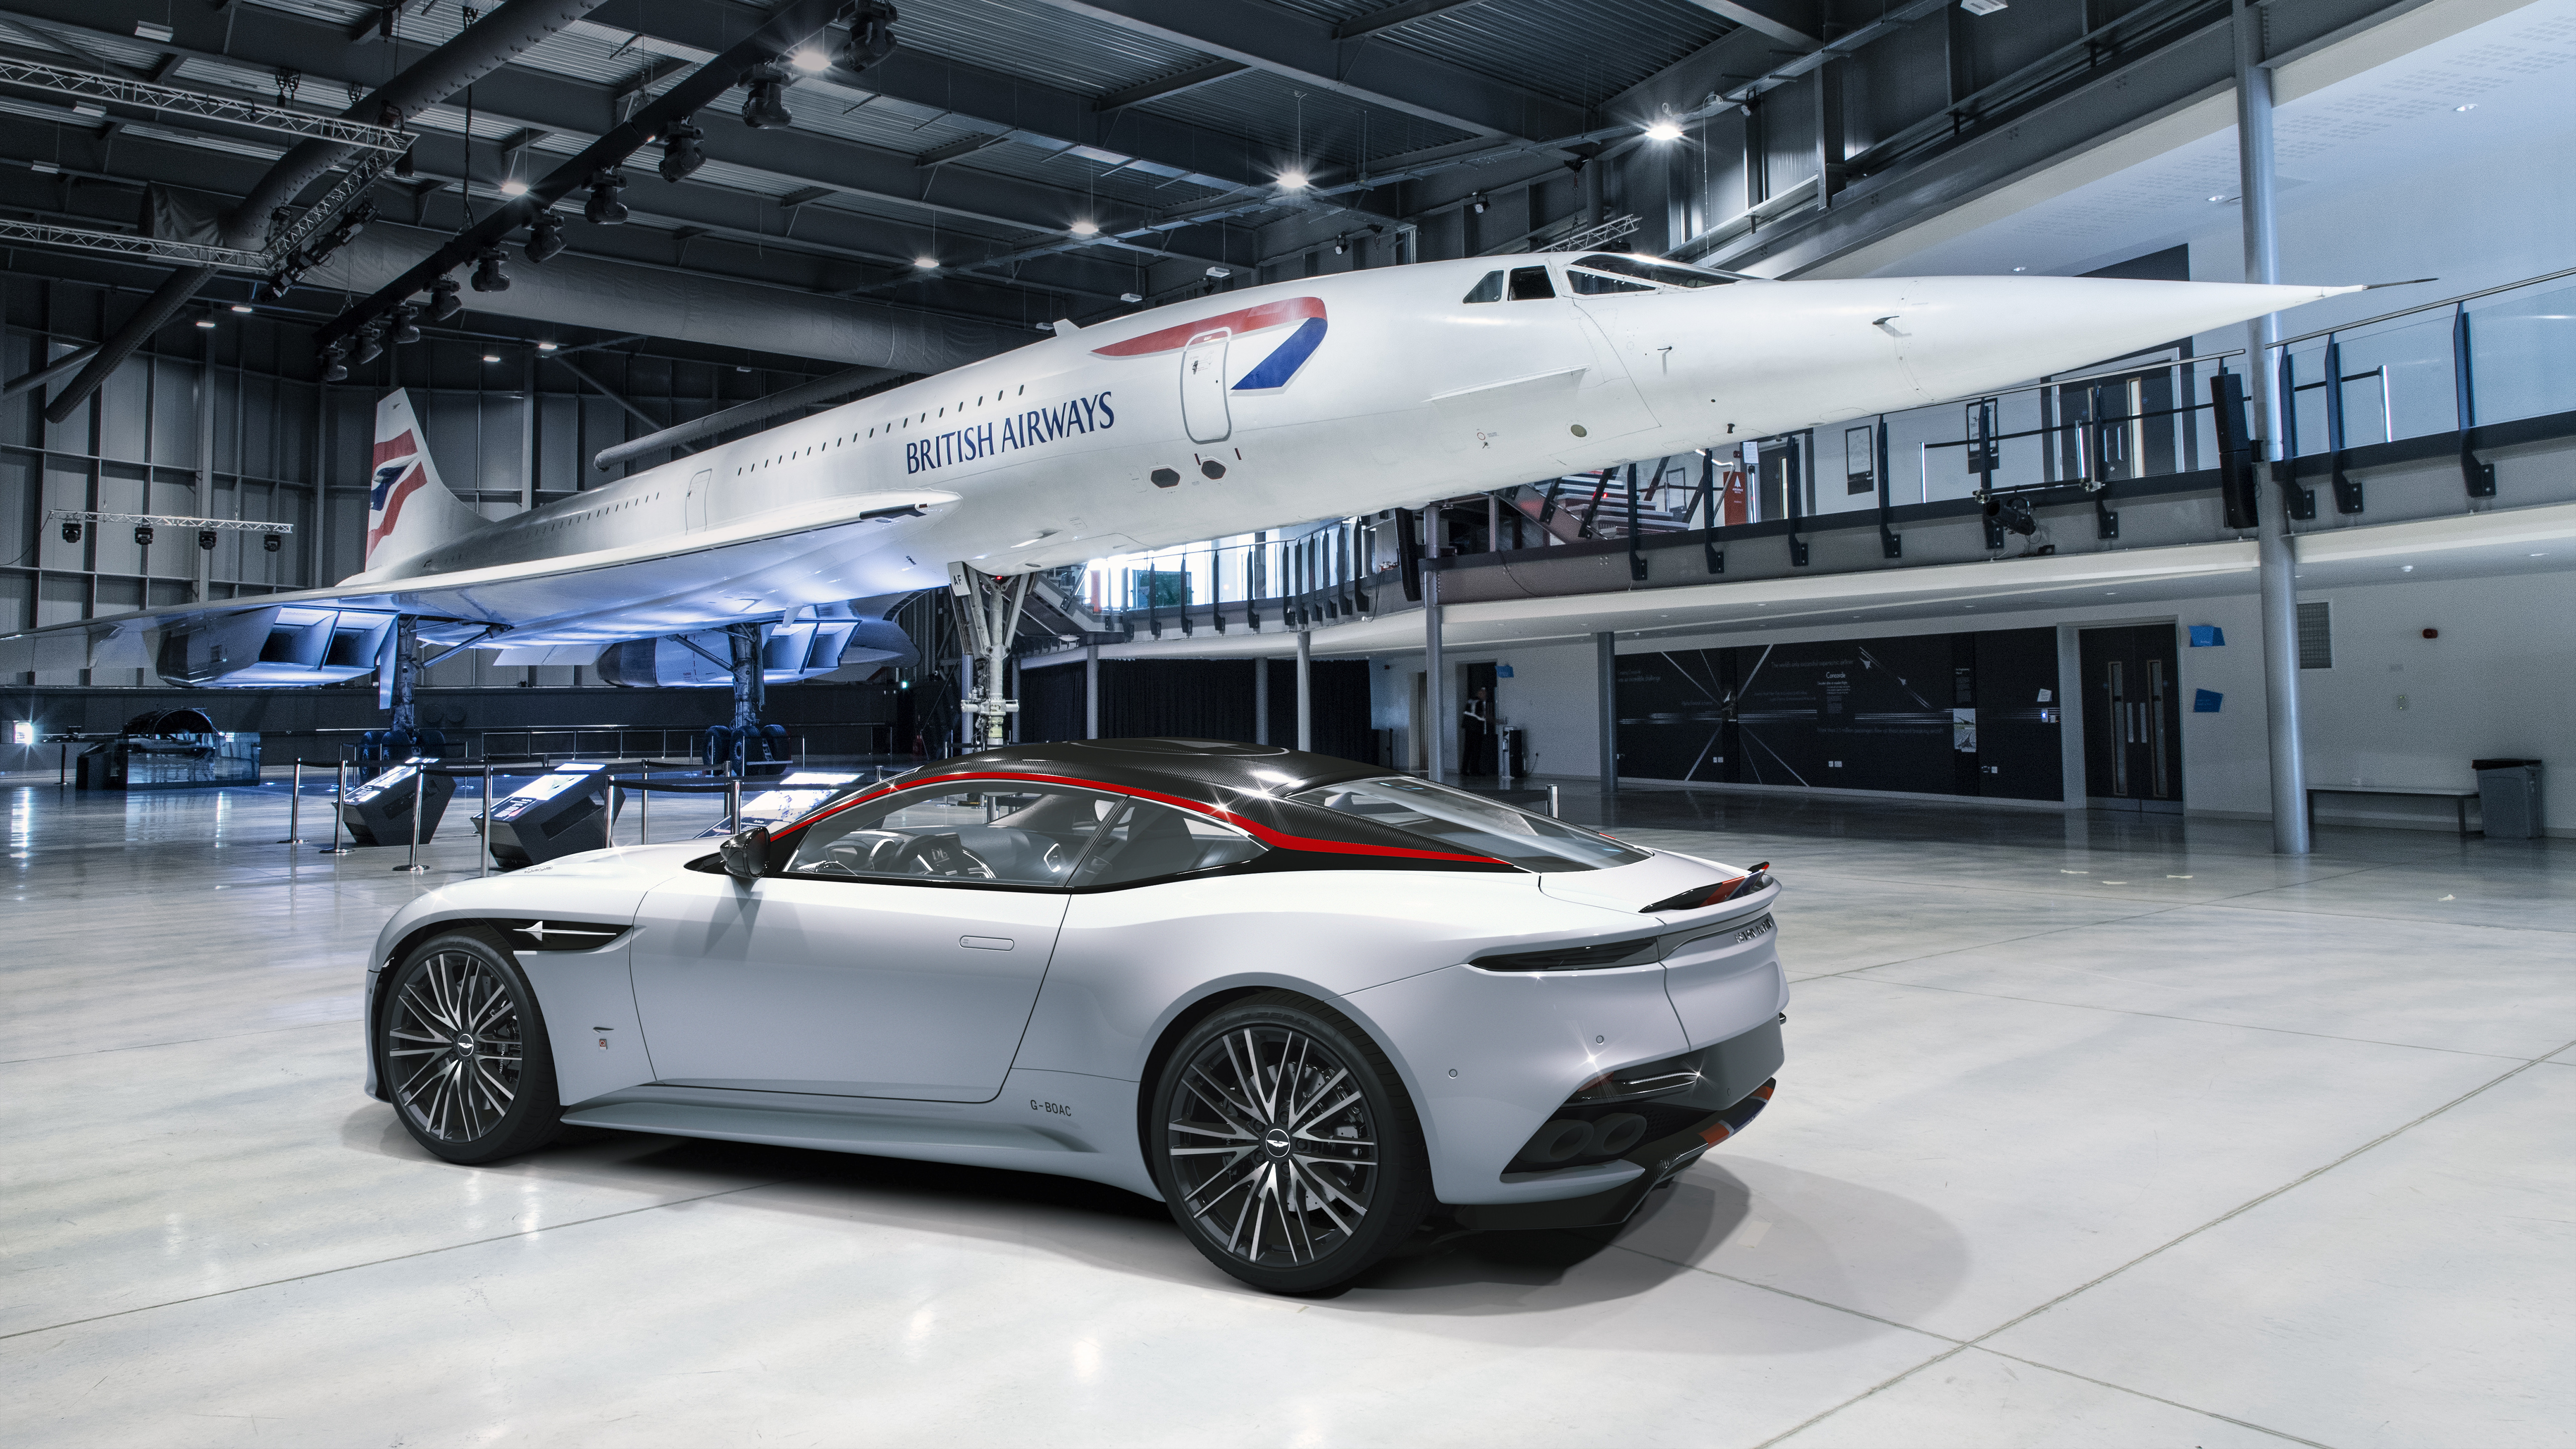 Unparalleled Luxury: The 2019 Aston Martin DBS Superleggera Concorde Edition